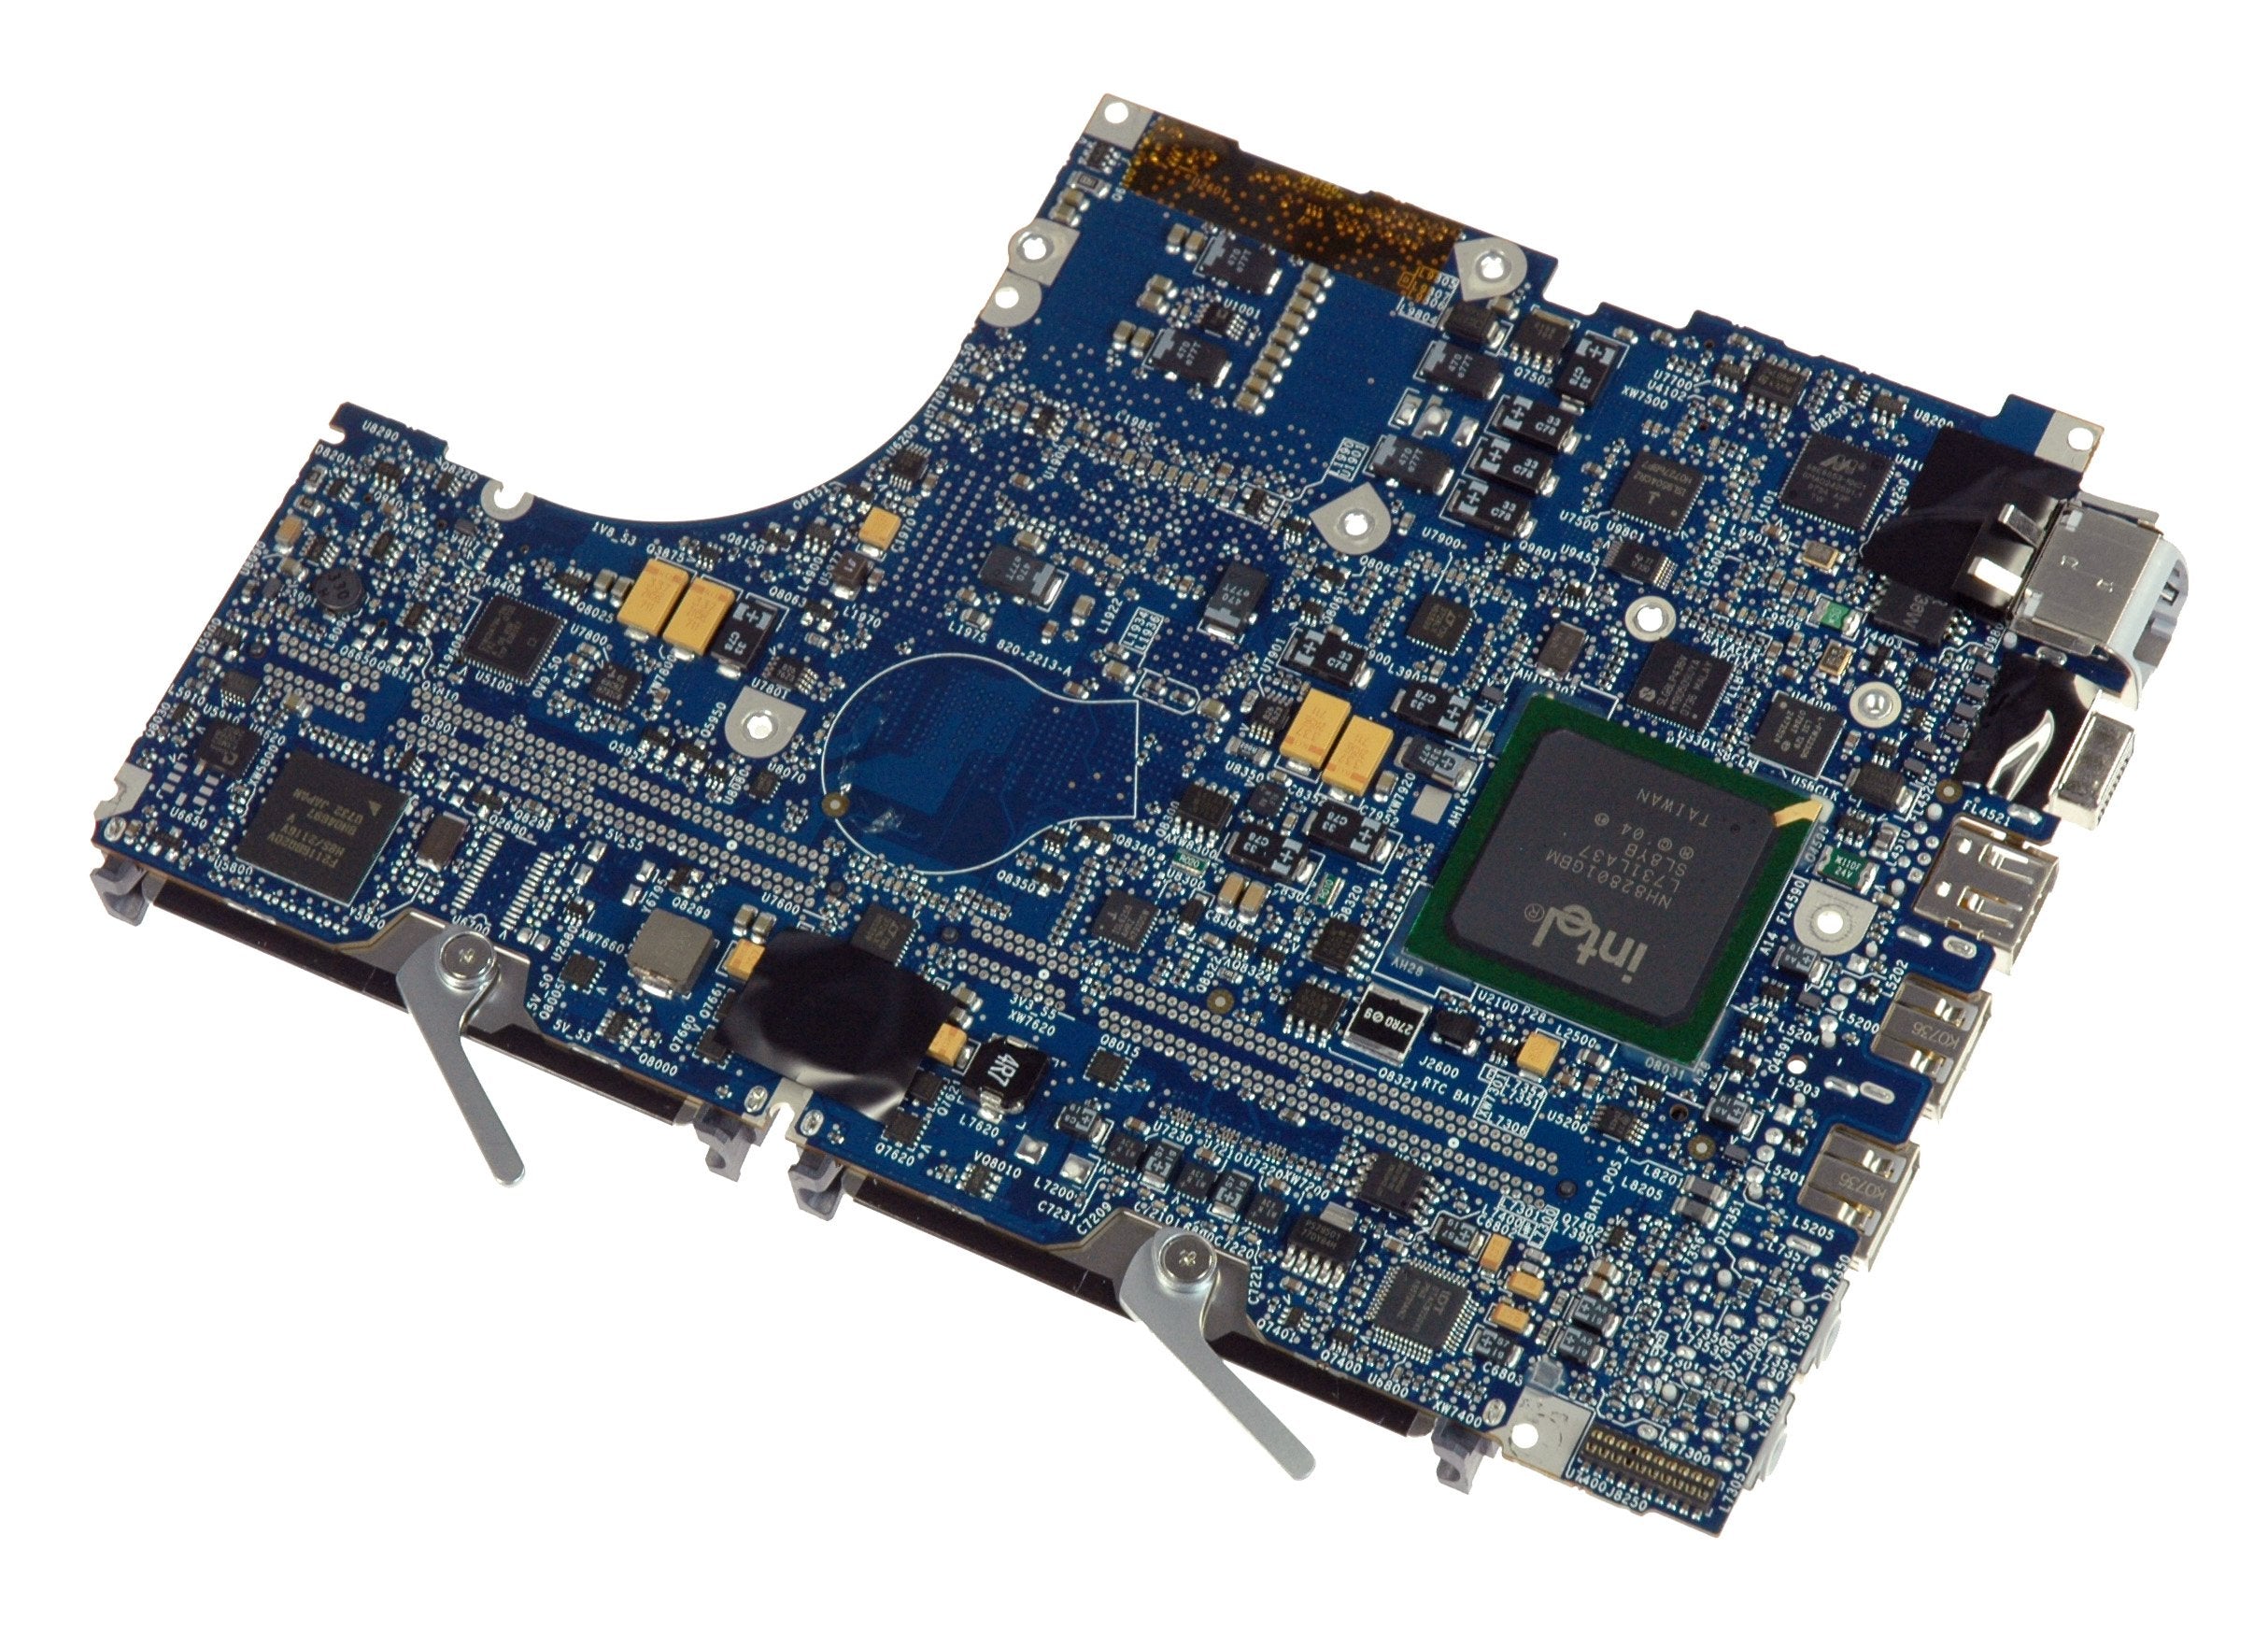 MacBook Core 2 Duo 2.16 GHz (Energy Star) Logic Board